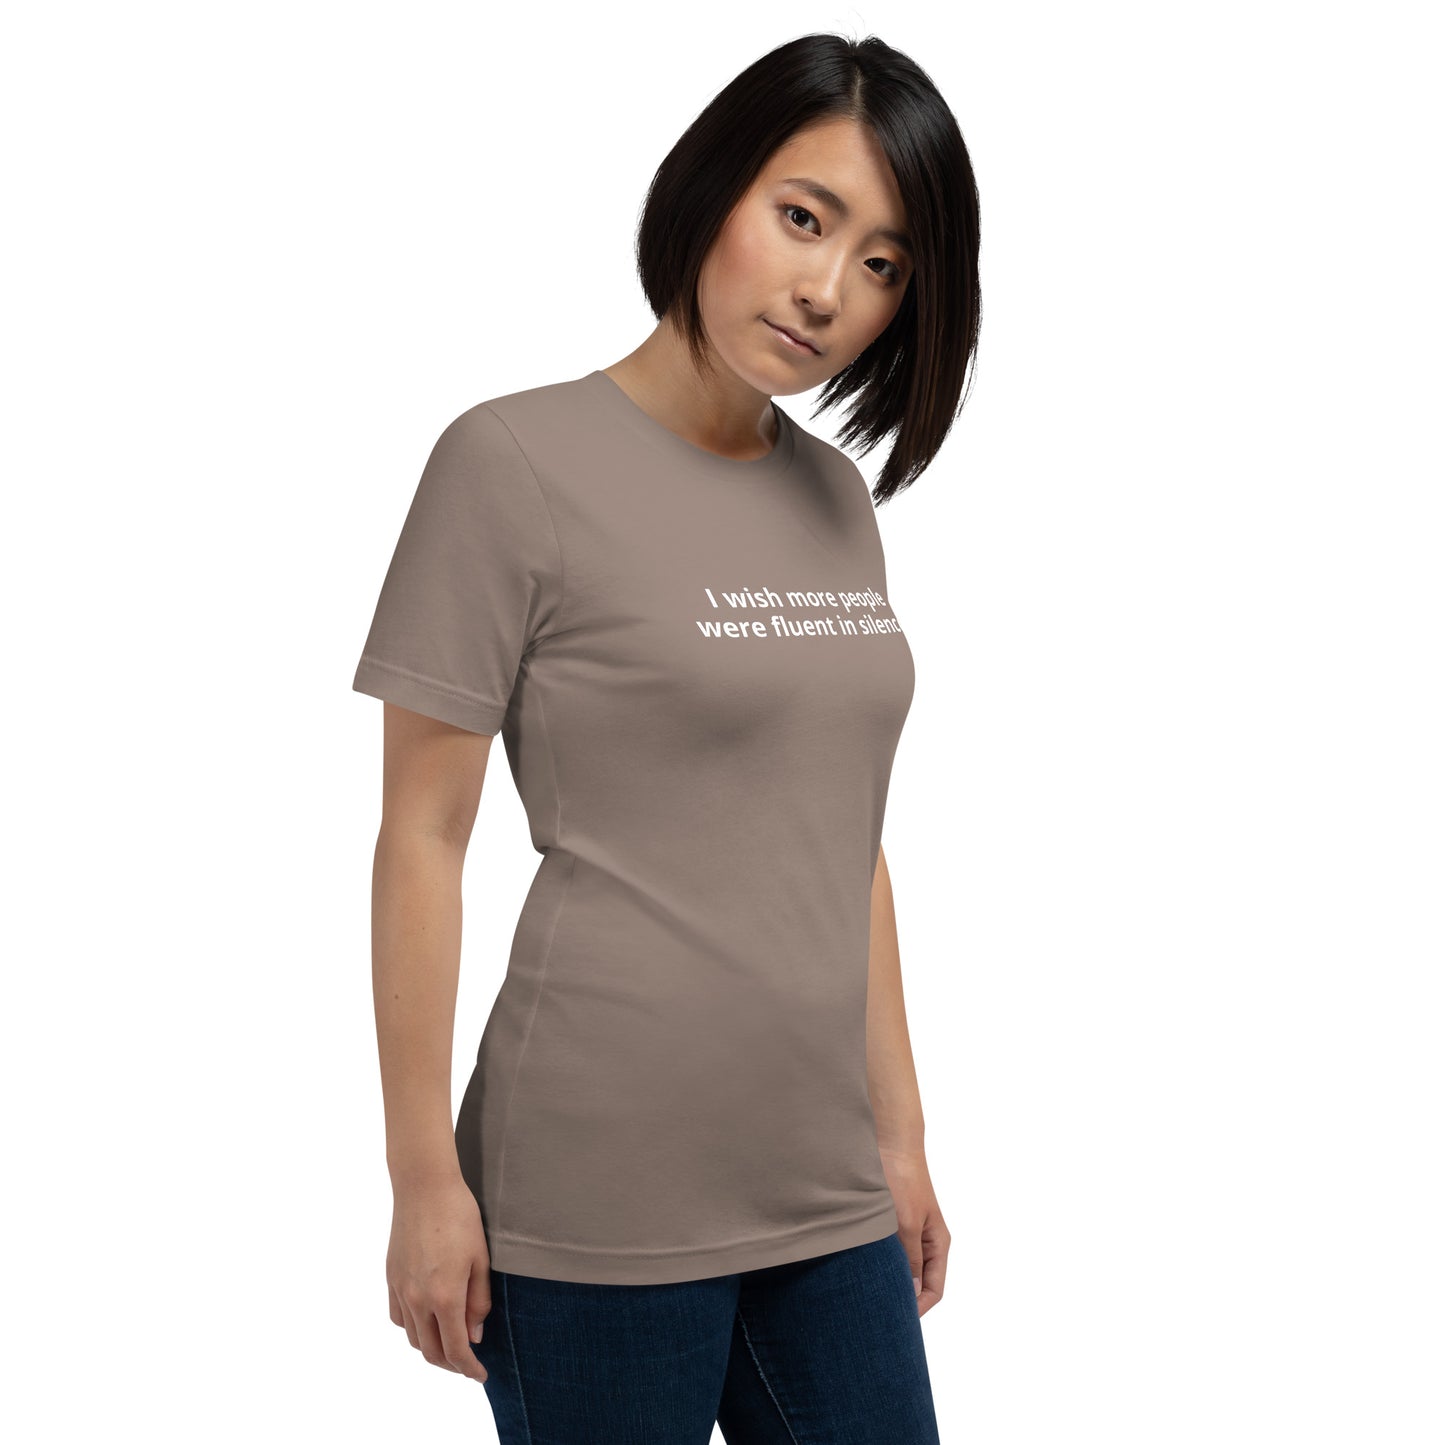 Silence Funny Unisex t-shirt CedarHill Country Market